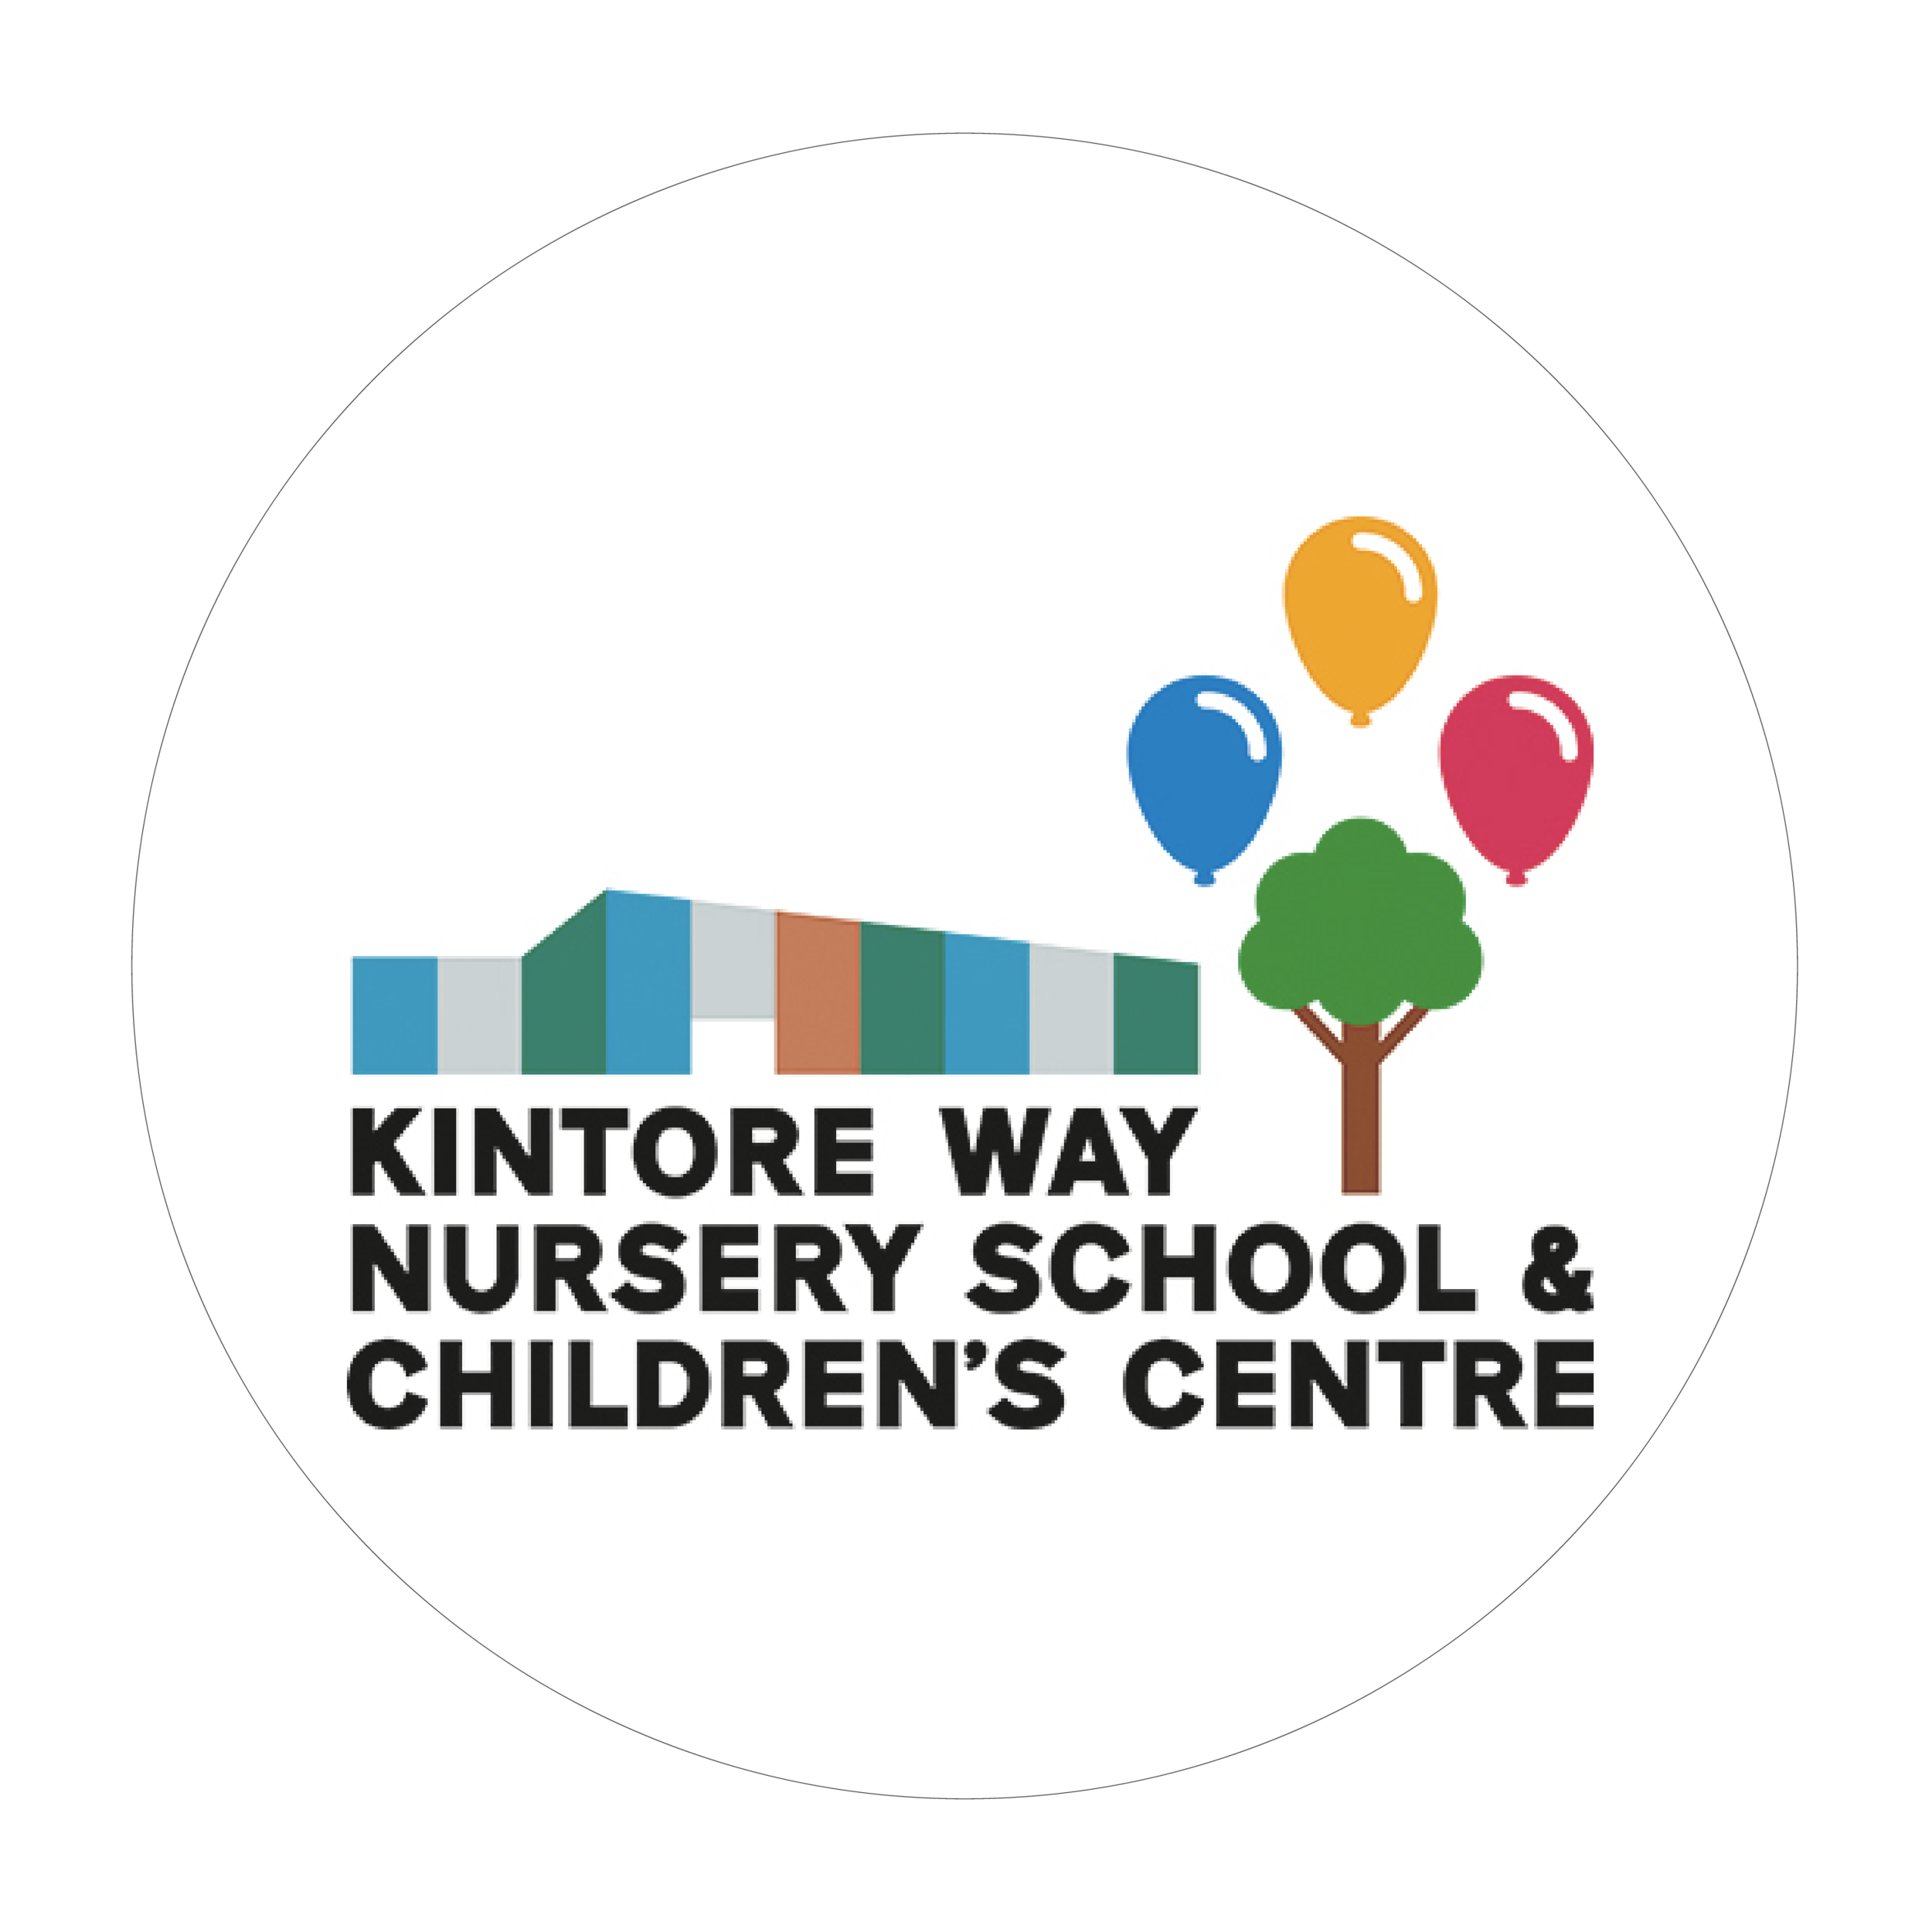 Kintore Way Nursery School and Children’s Centre